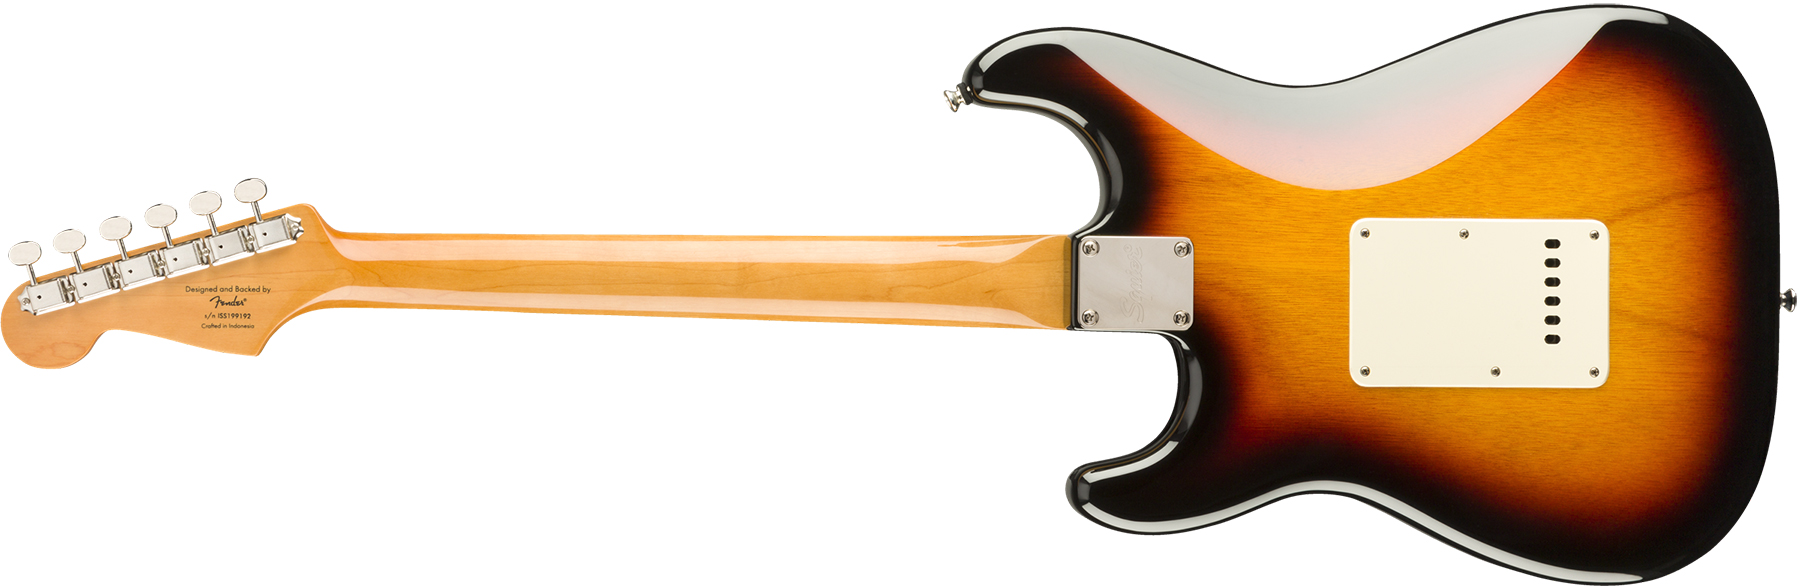 Squier Classic Vibe '60s Stratocaster - 3-color sunburst sunburst